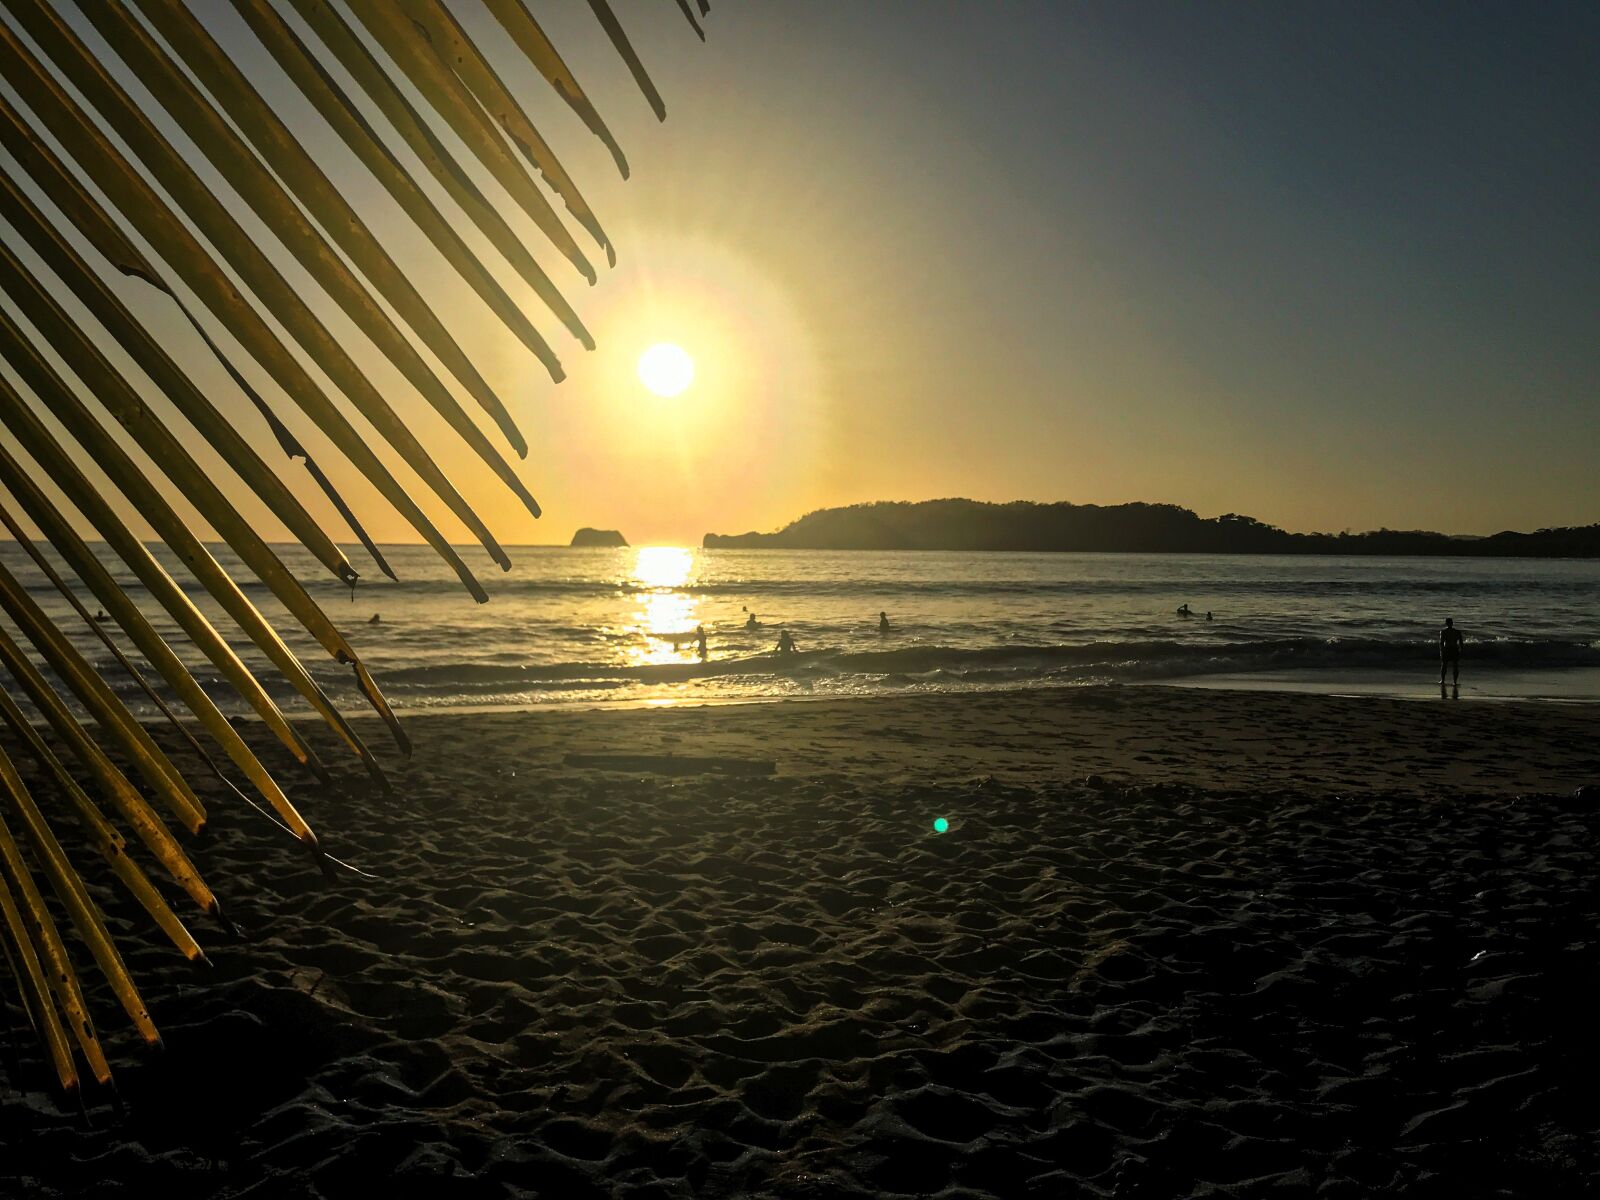 iPhone 7 Plus back dual camera 3.99mm f/1.8 sample photo. Sunset, palm, beach photography